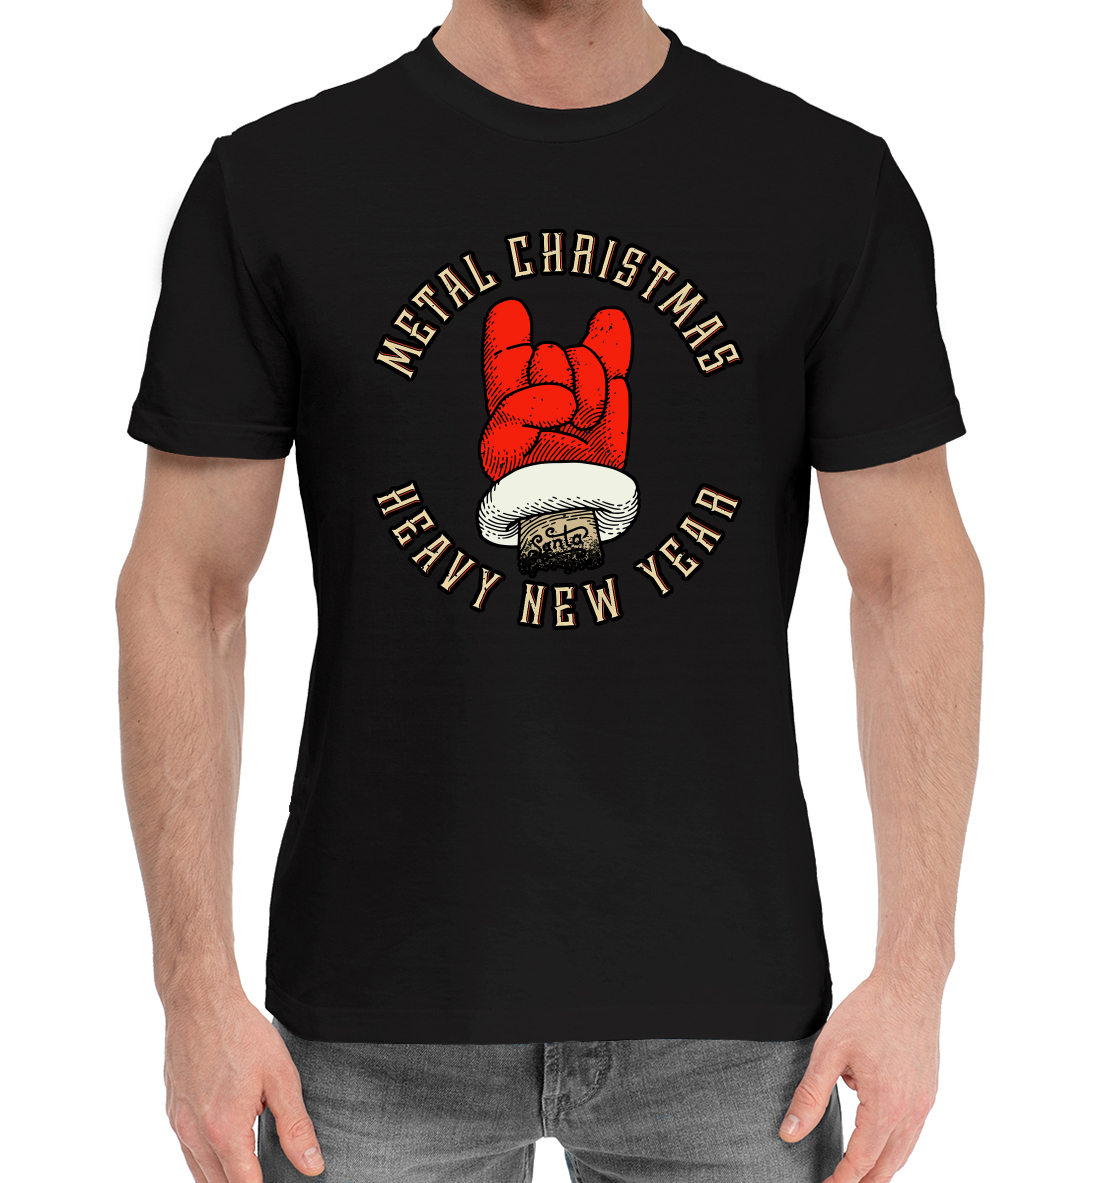 Мужская Хлопковая футболка с принтом Heavy New Year, артикул NOV-956312-hfu-2mp